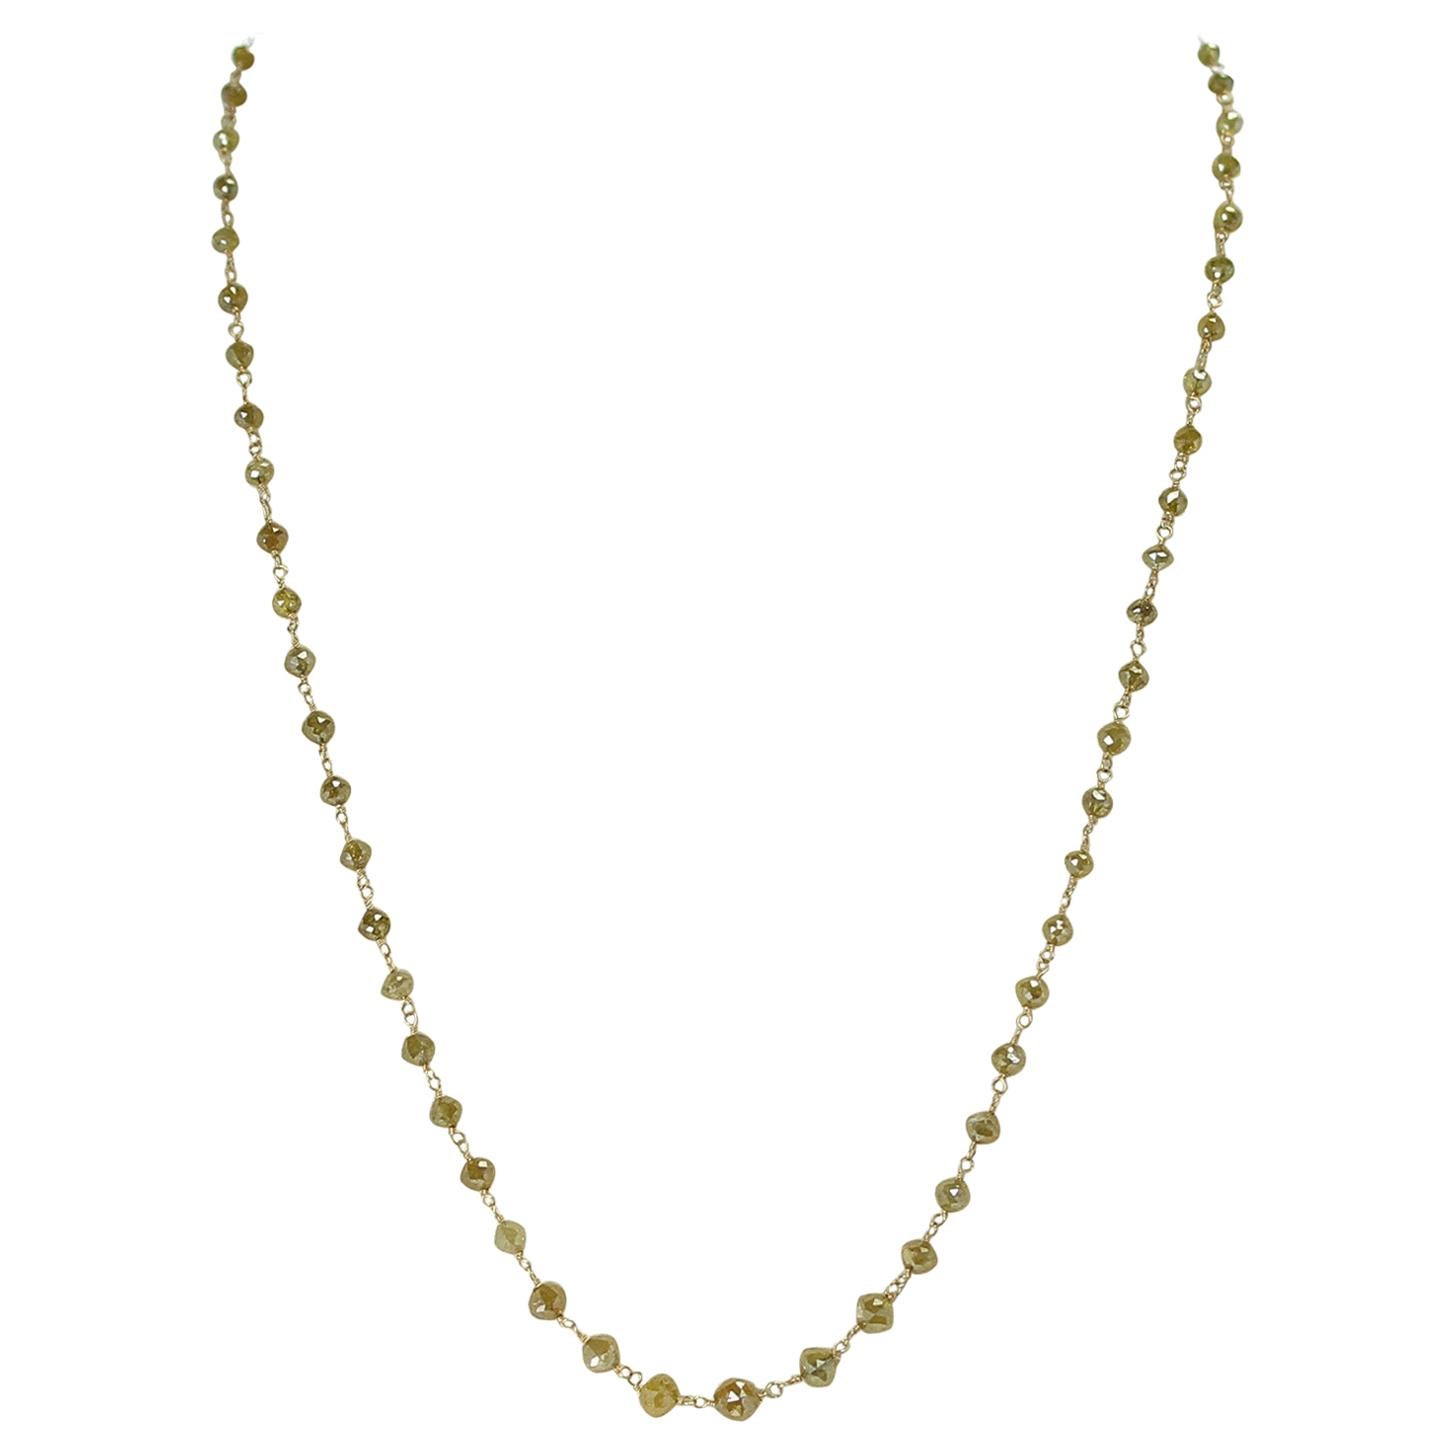 Genuine Yellow with Greenish Hue Diamond Beads Wire-Wrapped Necklace, 18 Karat